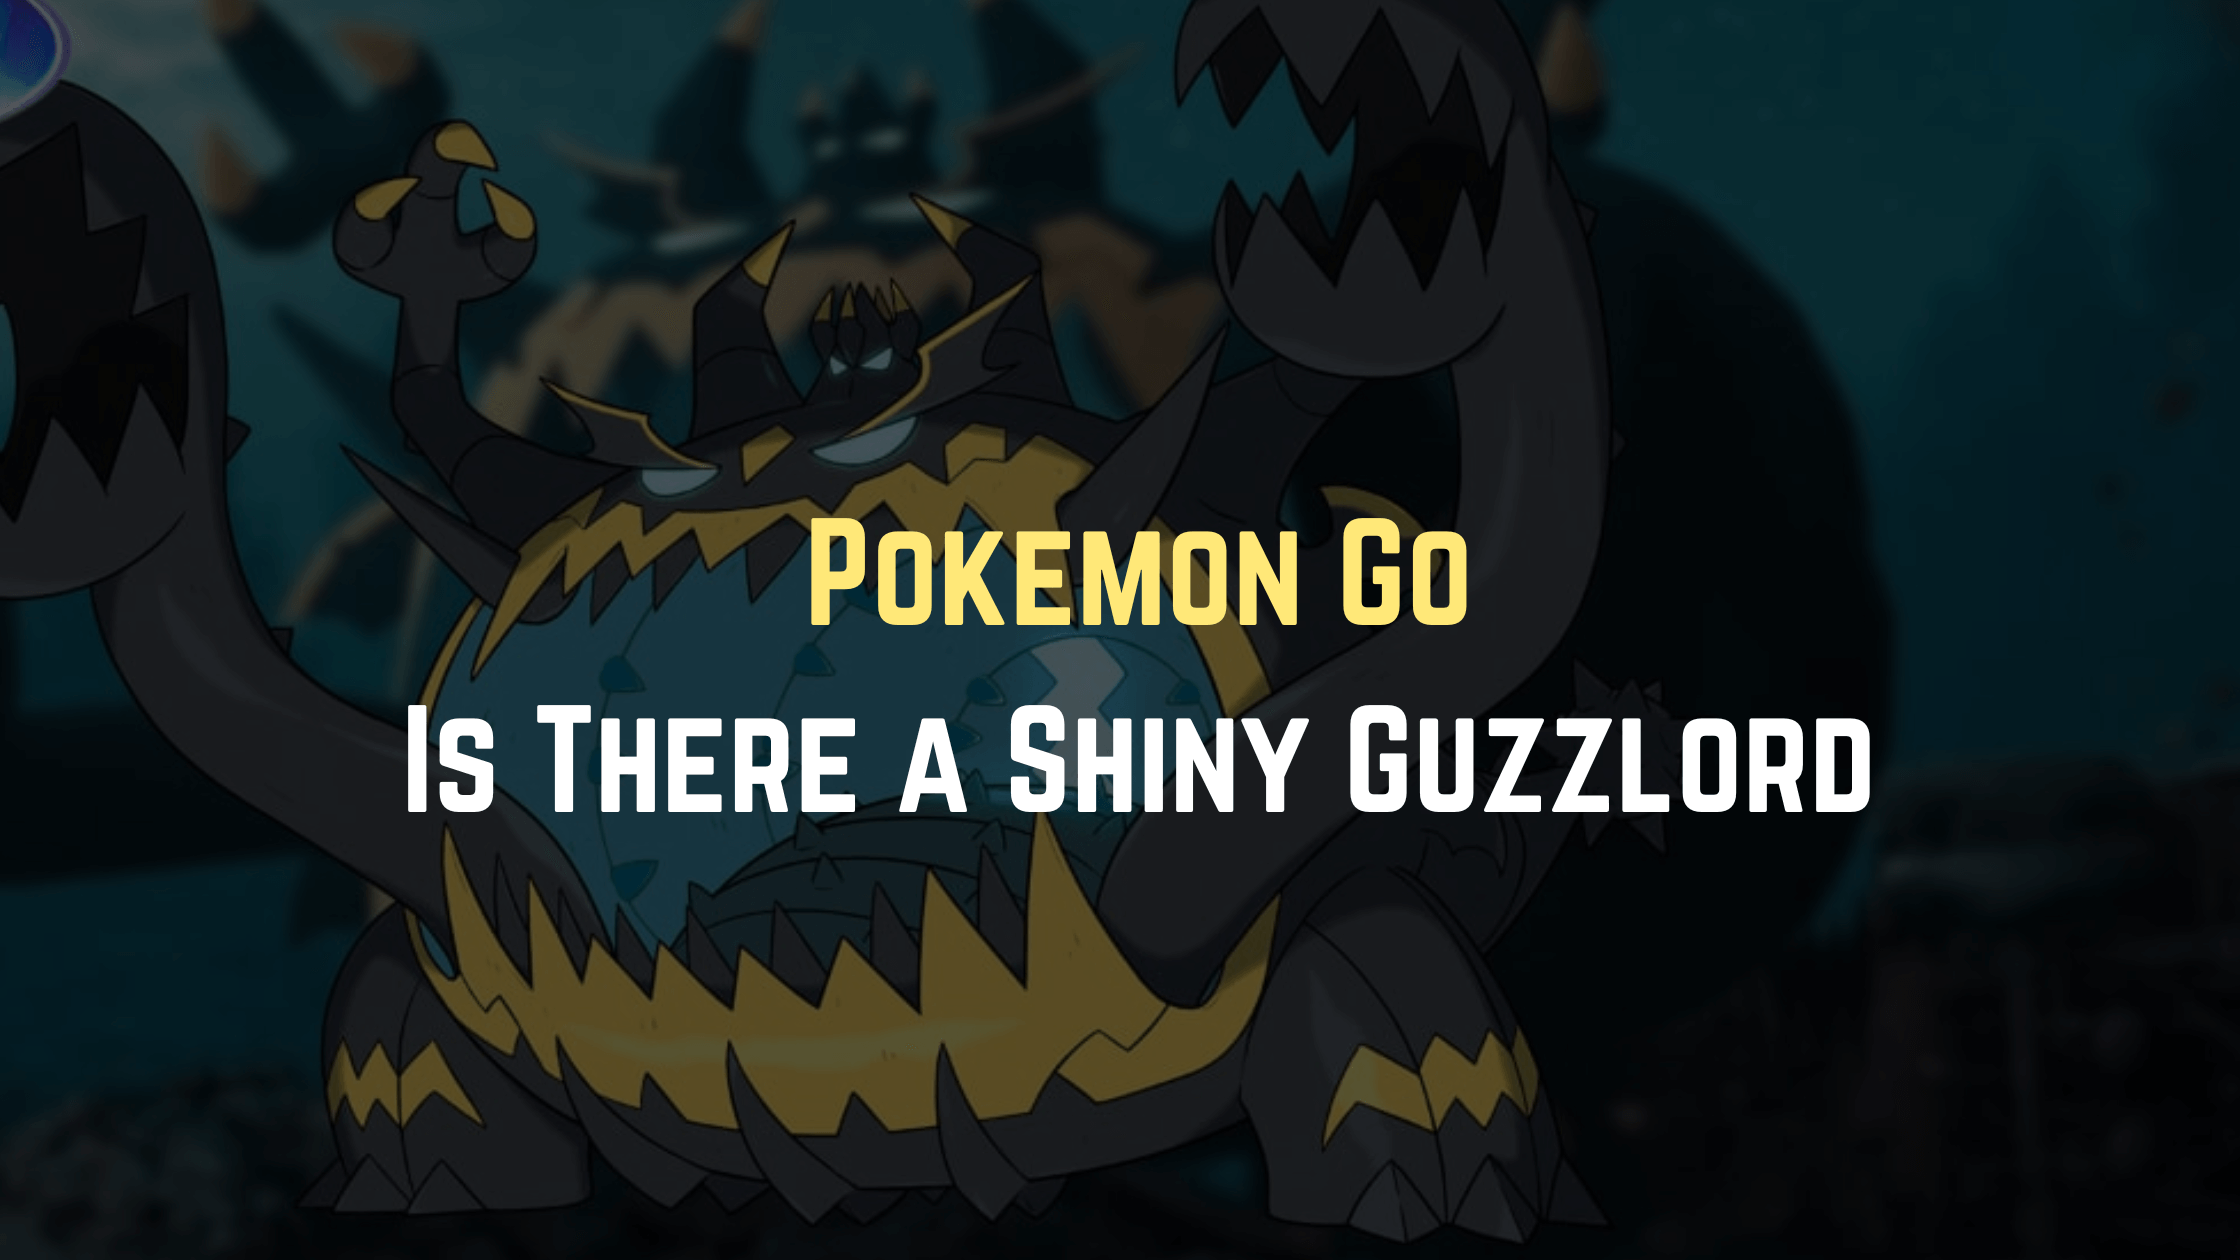 Shiny Guzzlord in Pokemon Go